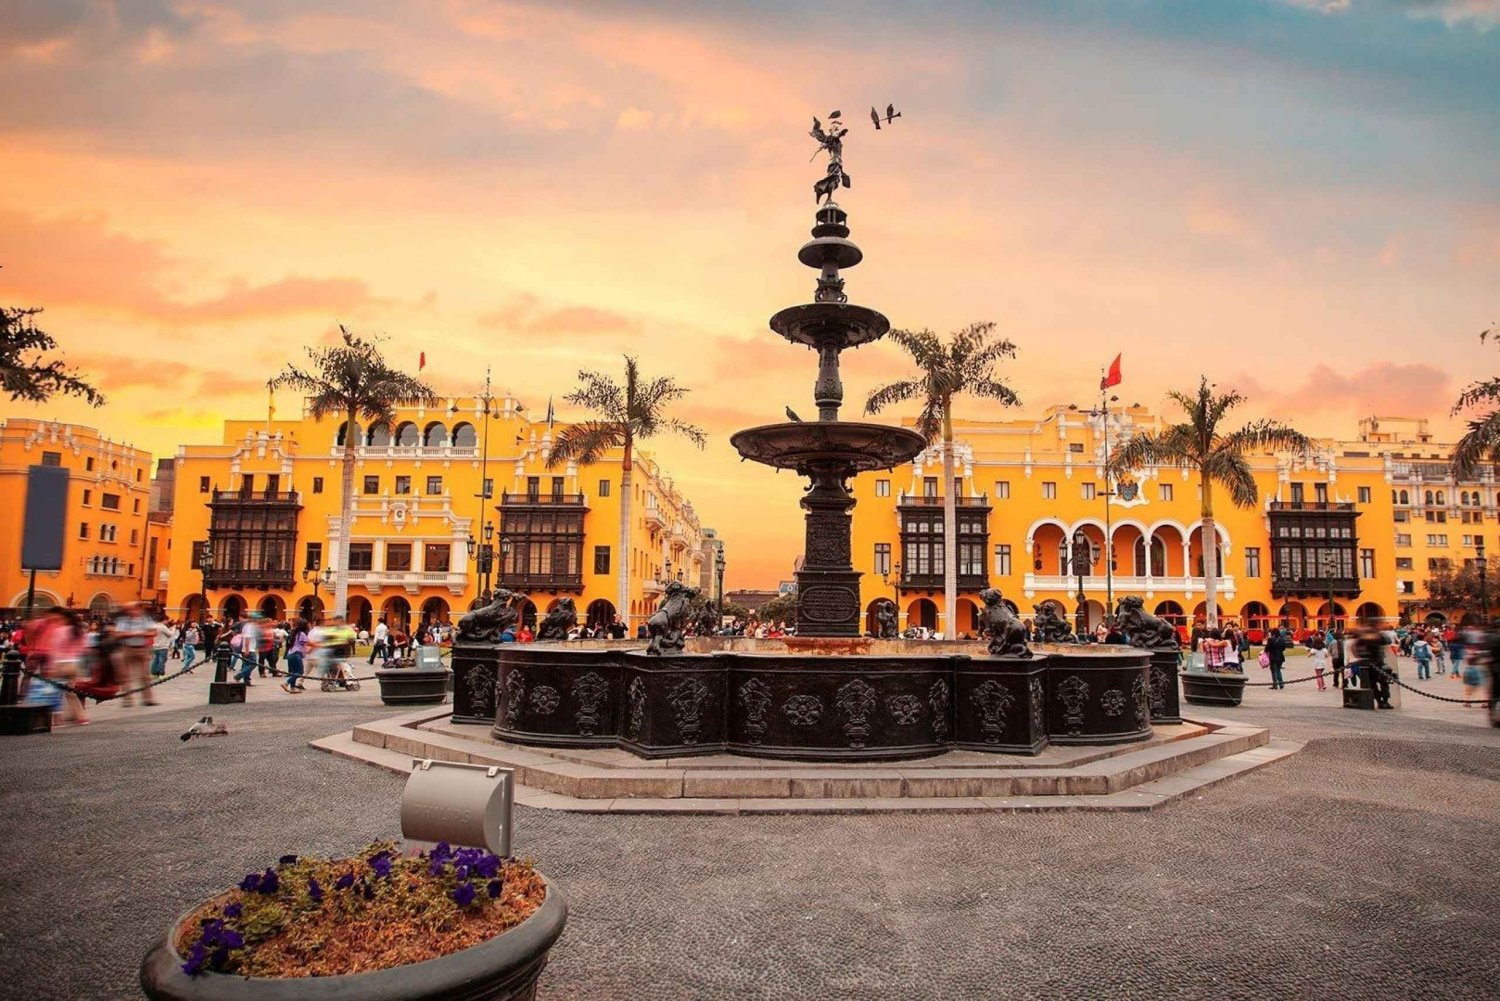 Circuito colonial e moderno de Lima - Explore os principais lugares de Lima